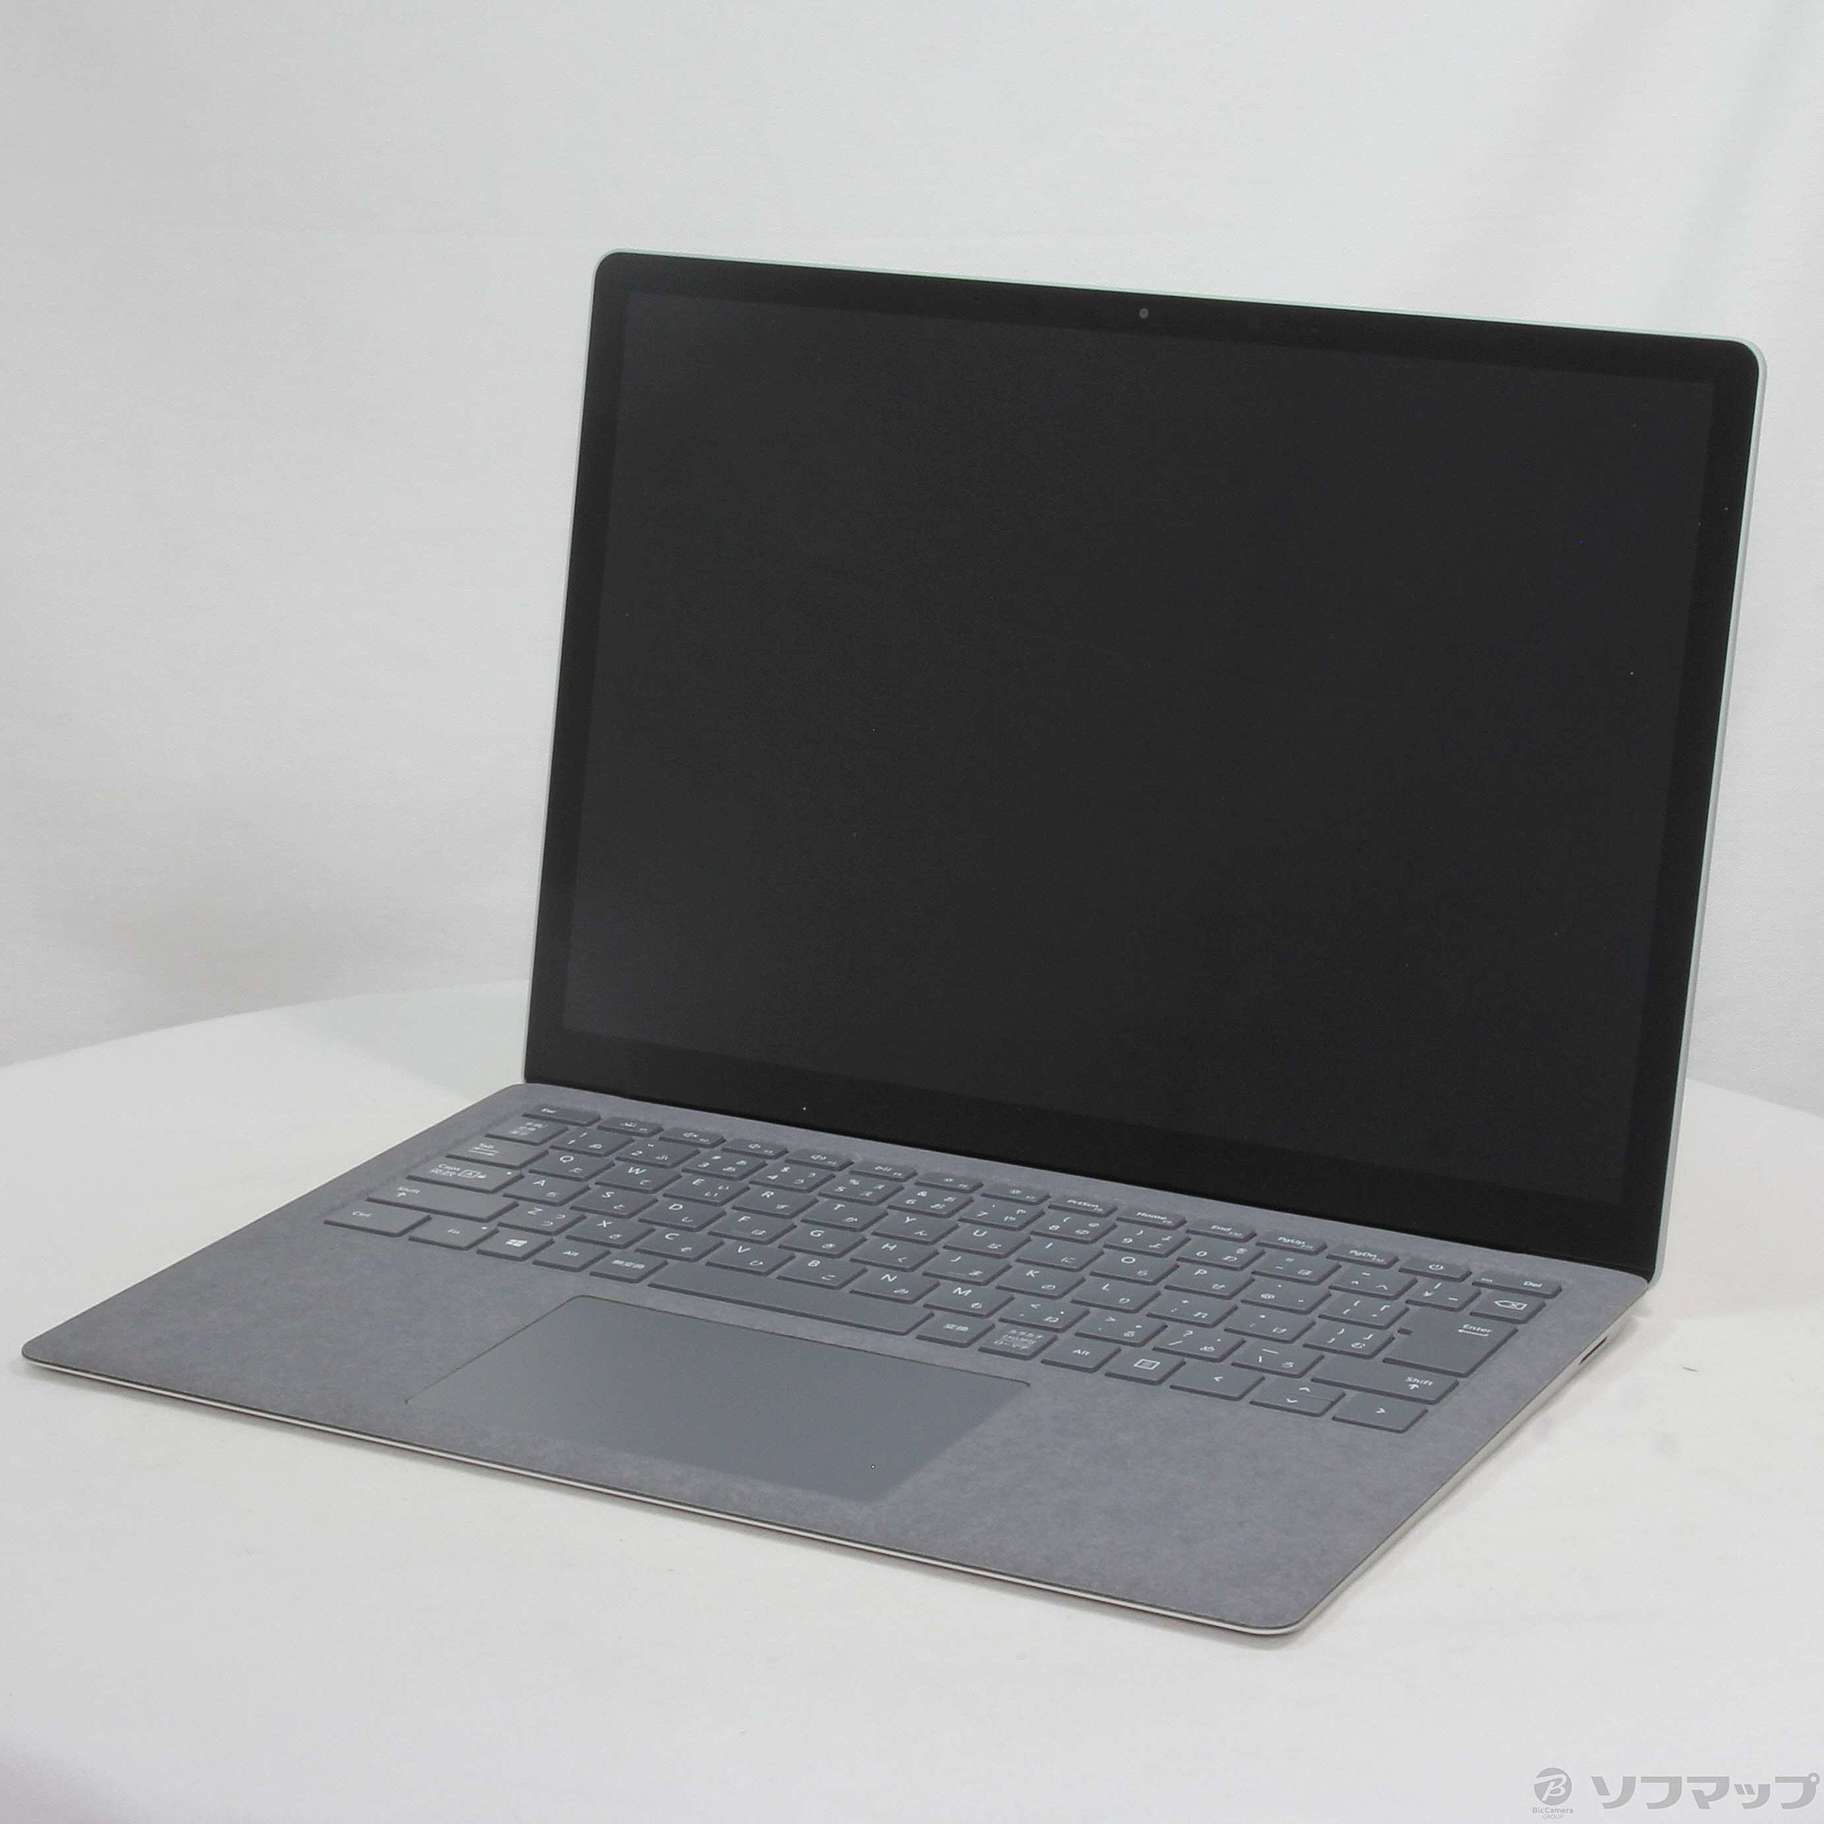 SurfaceLaptop4 13'5新品プラチナRyzen5/256G/16G